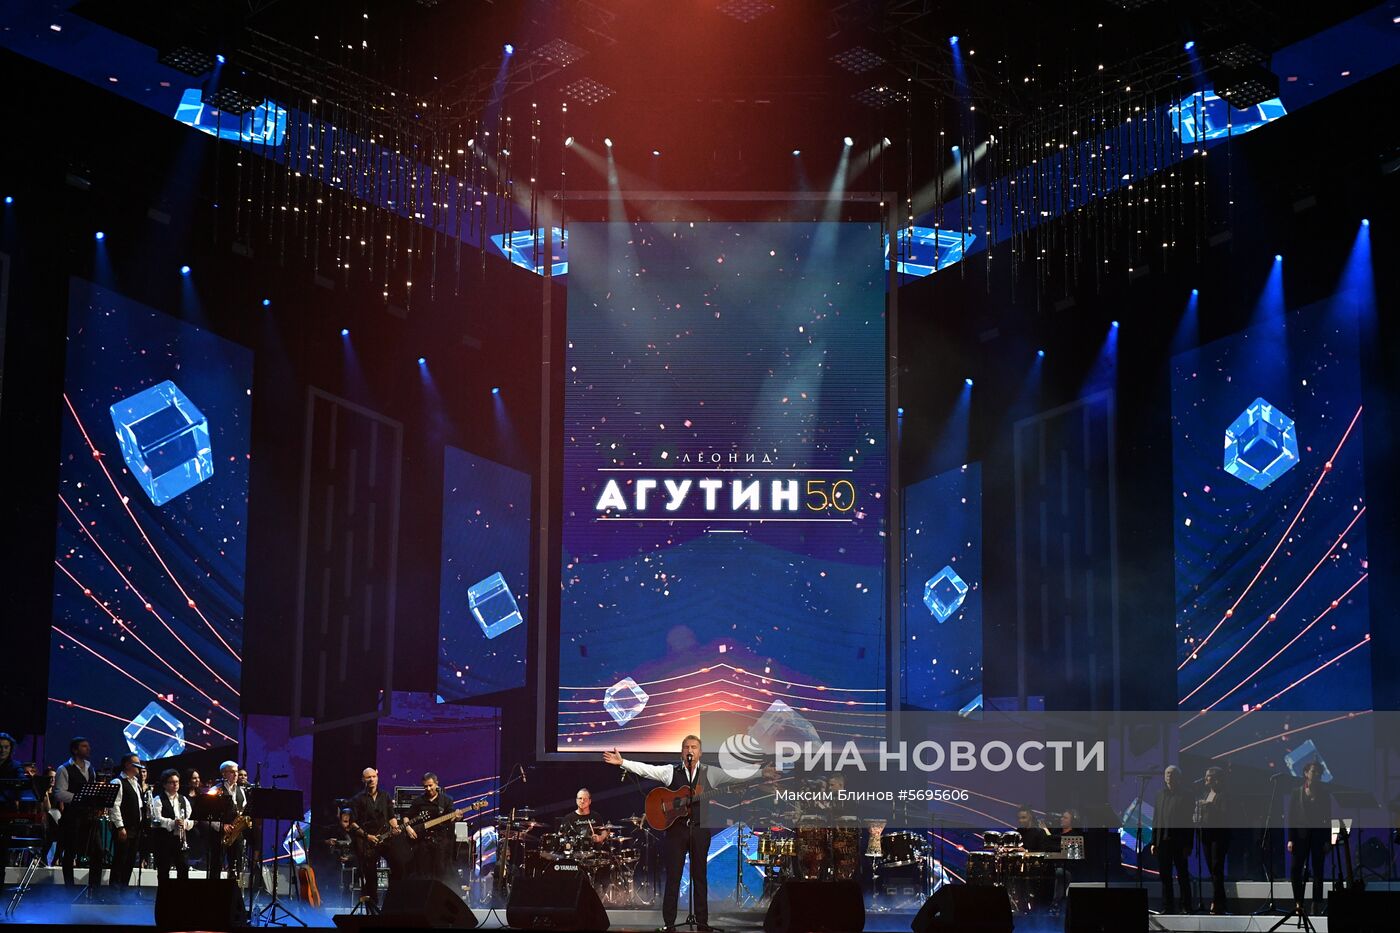 Юбилейный концерт Леонида Агутина